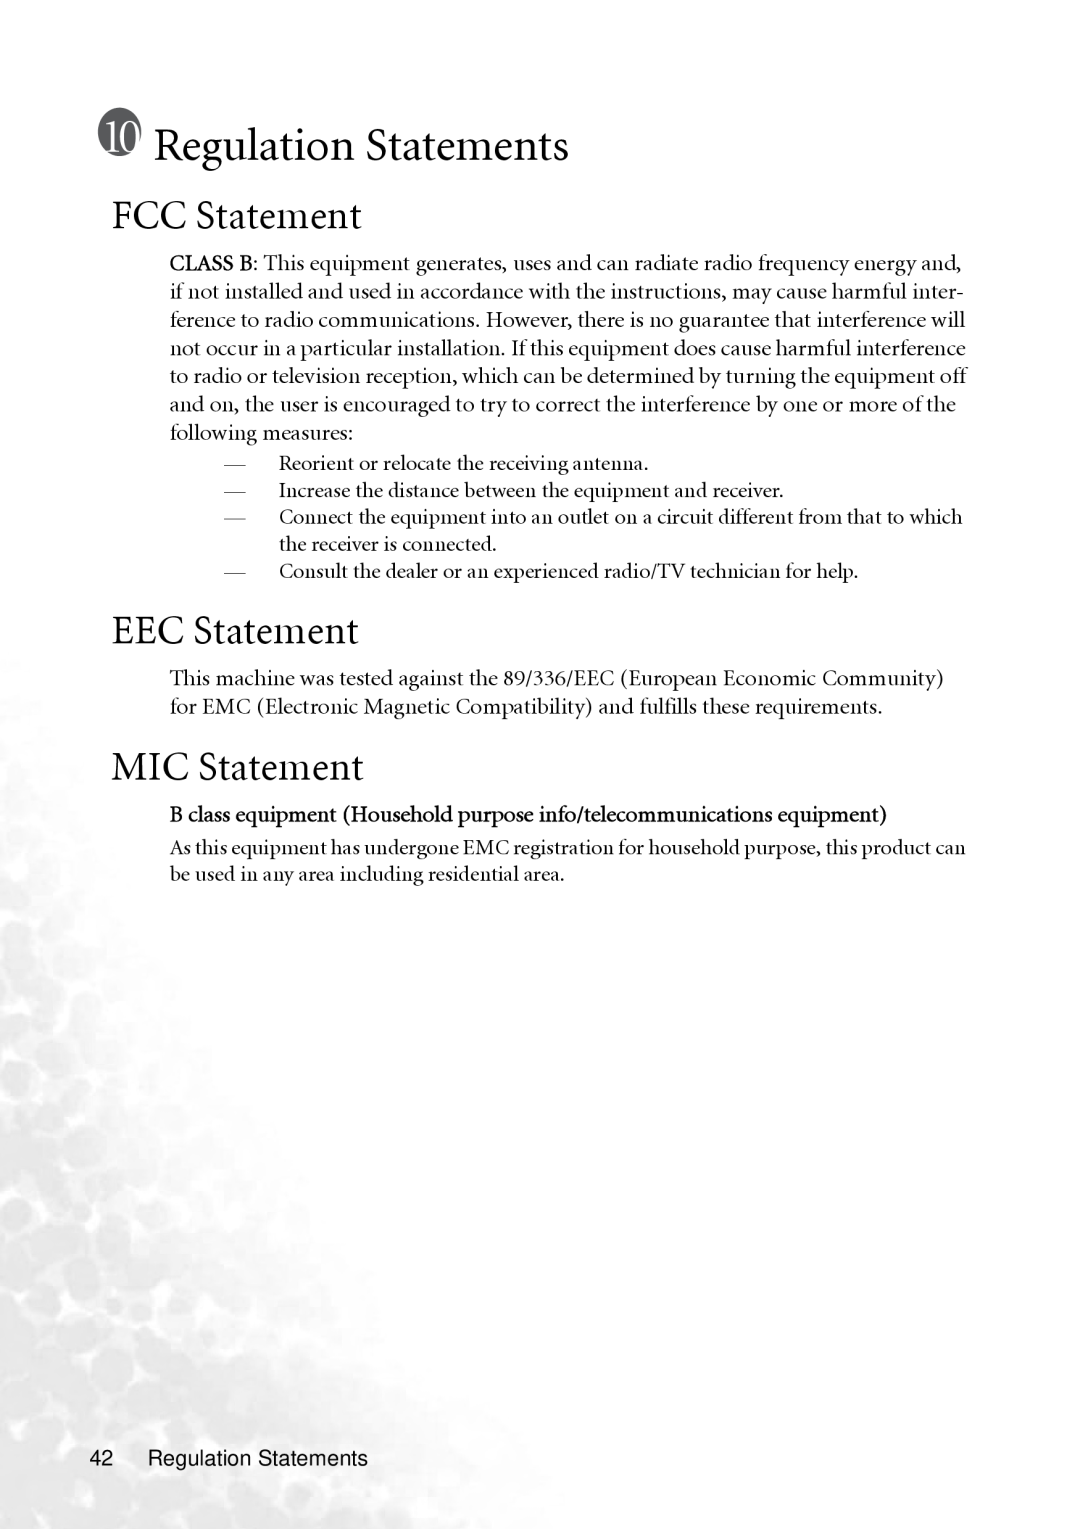 BenQ PB2240 user manual Regulation Statements, FCC Statement, EEC Statement, MIC Statement 